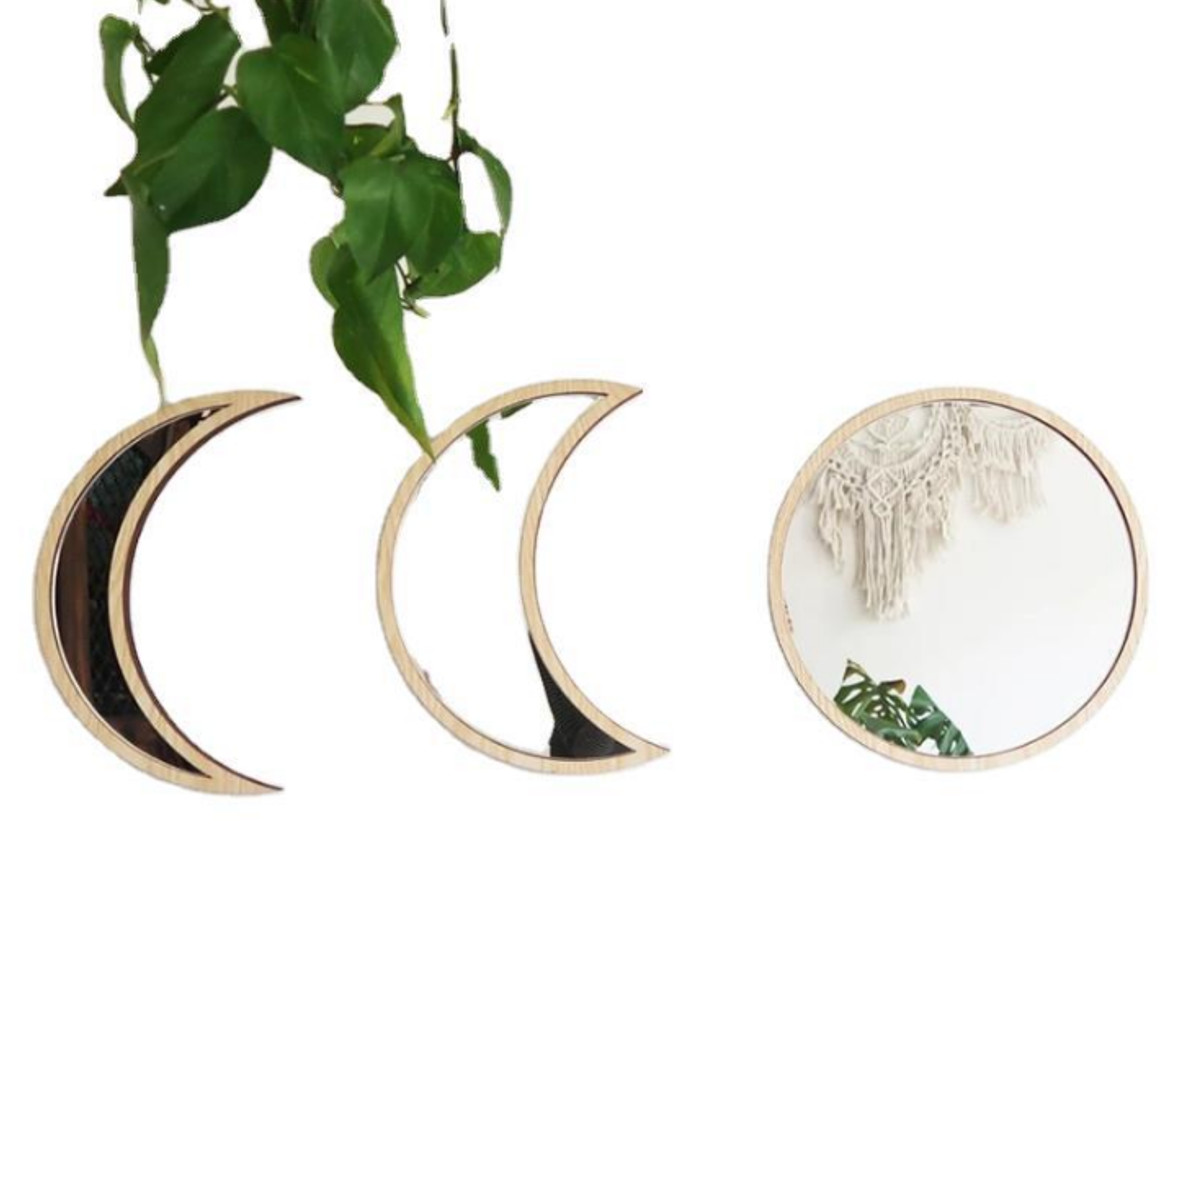 35-Pcs-Moon-Phase-Mirror-Nordic-Acrylic-Style-Wooden-Decorative-Mirror-Bedroom-1713655